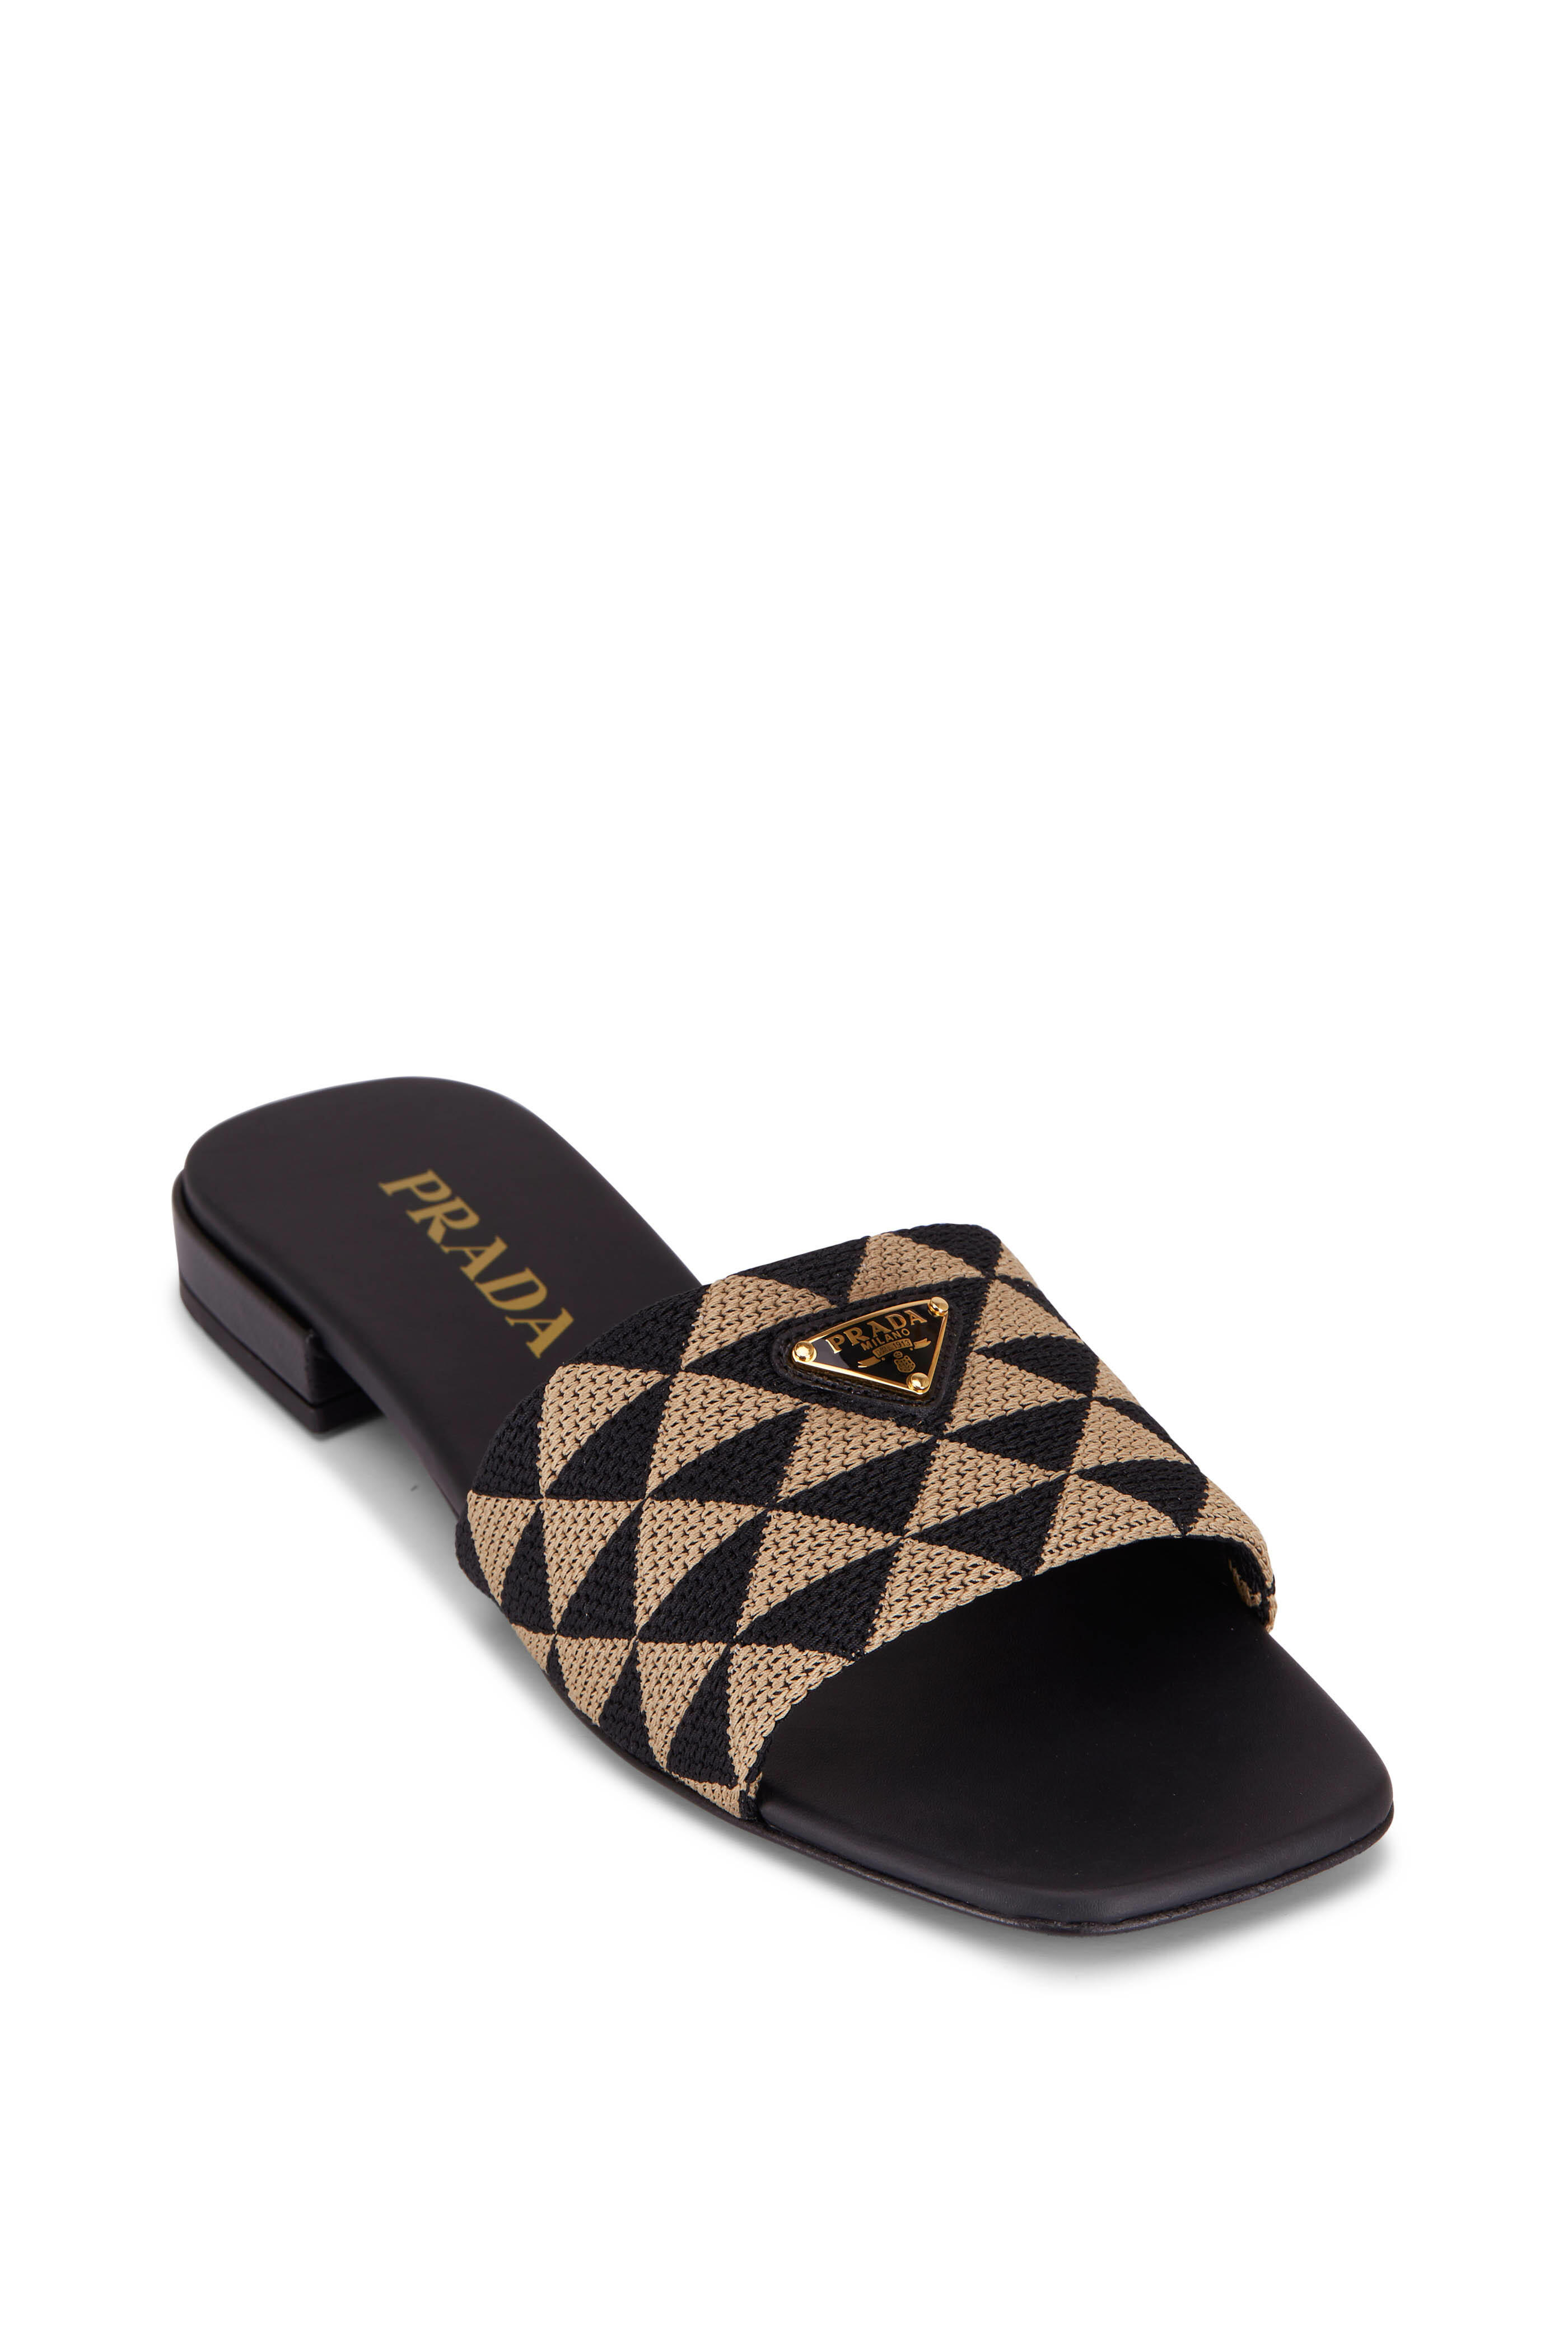 Prada - Black & Tan Triangle Jacquard Flat Sandal